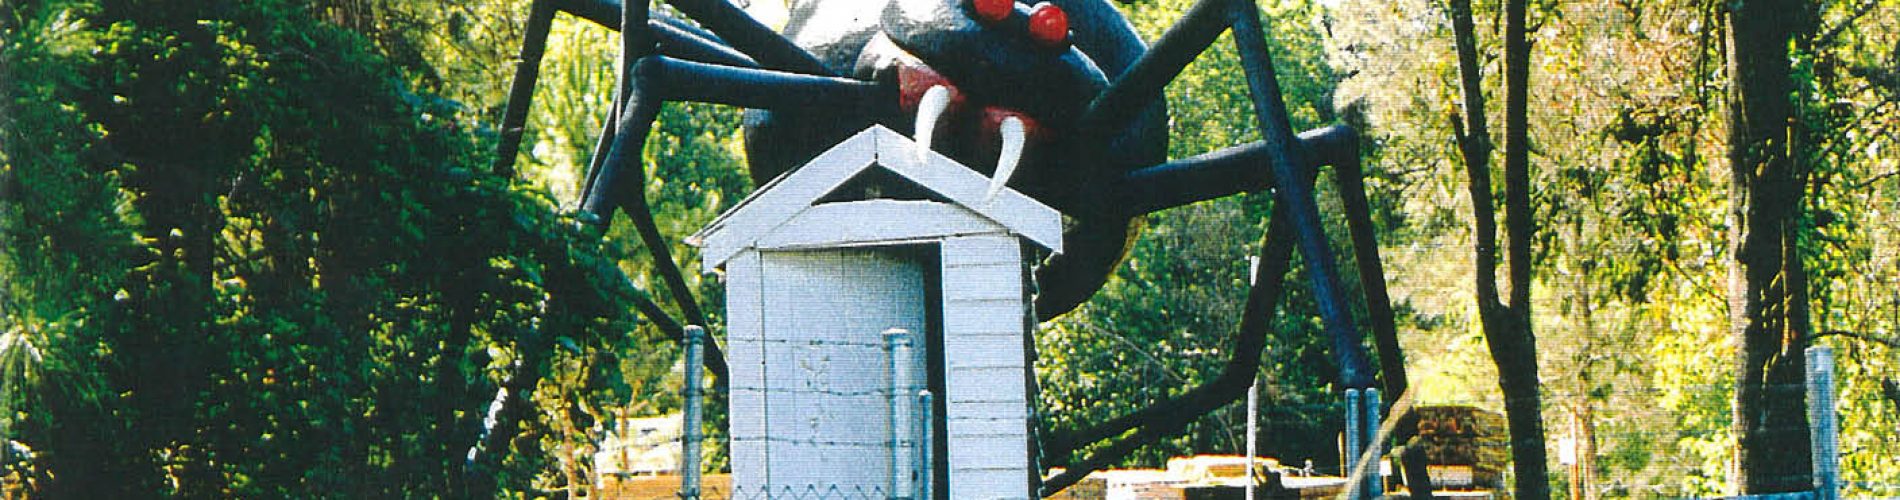 Redback Spider scares customers